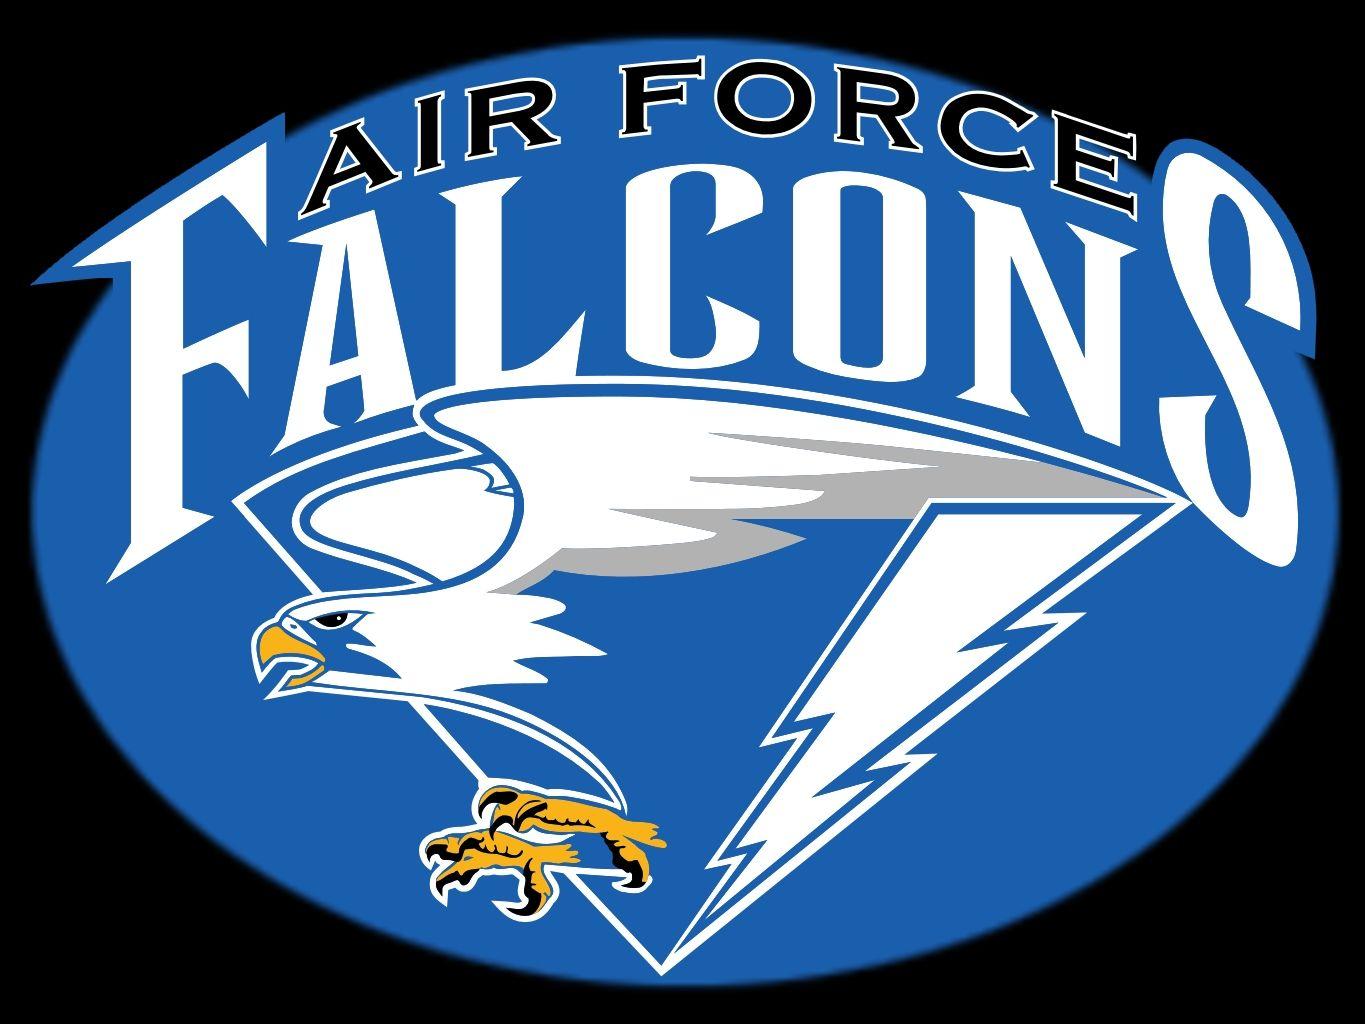 Air Force Football Logo - Air Force Falcons | Wallpaper and Cover Photos | Pinterest | Falcons ...